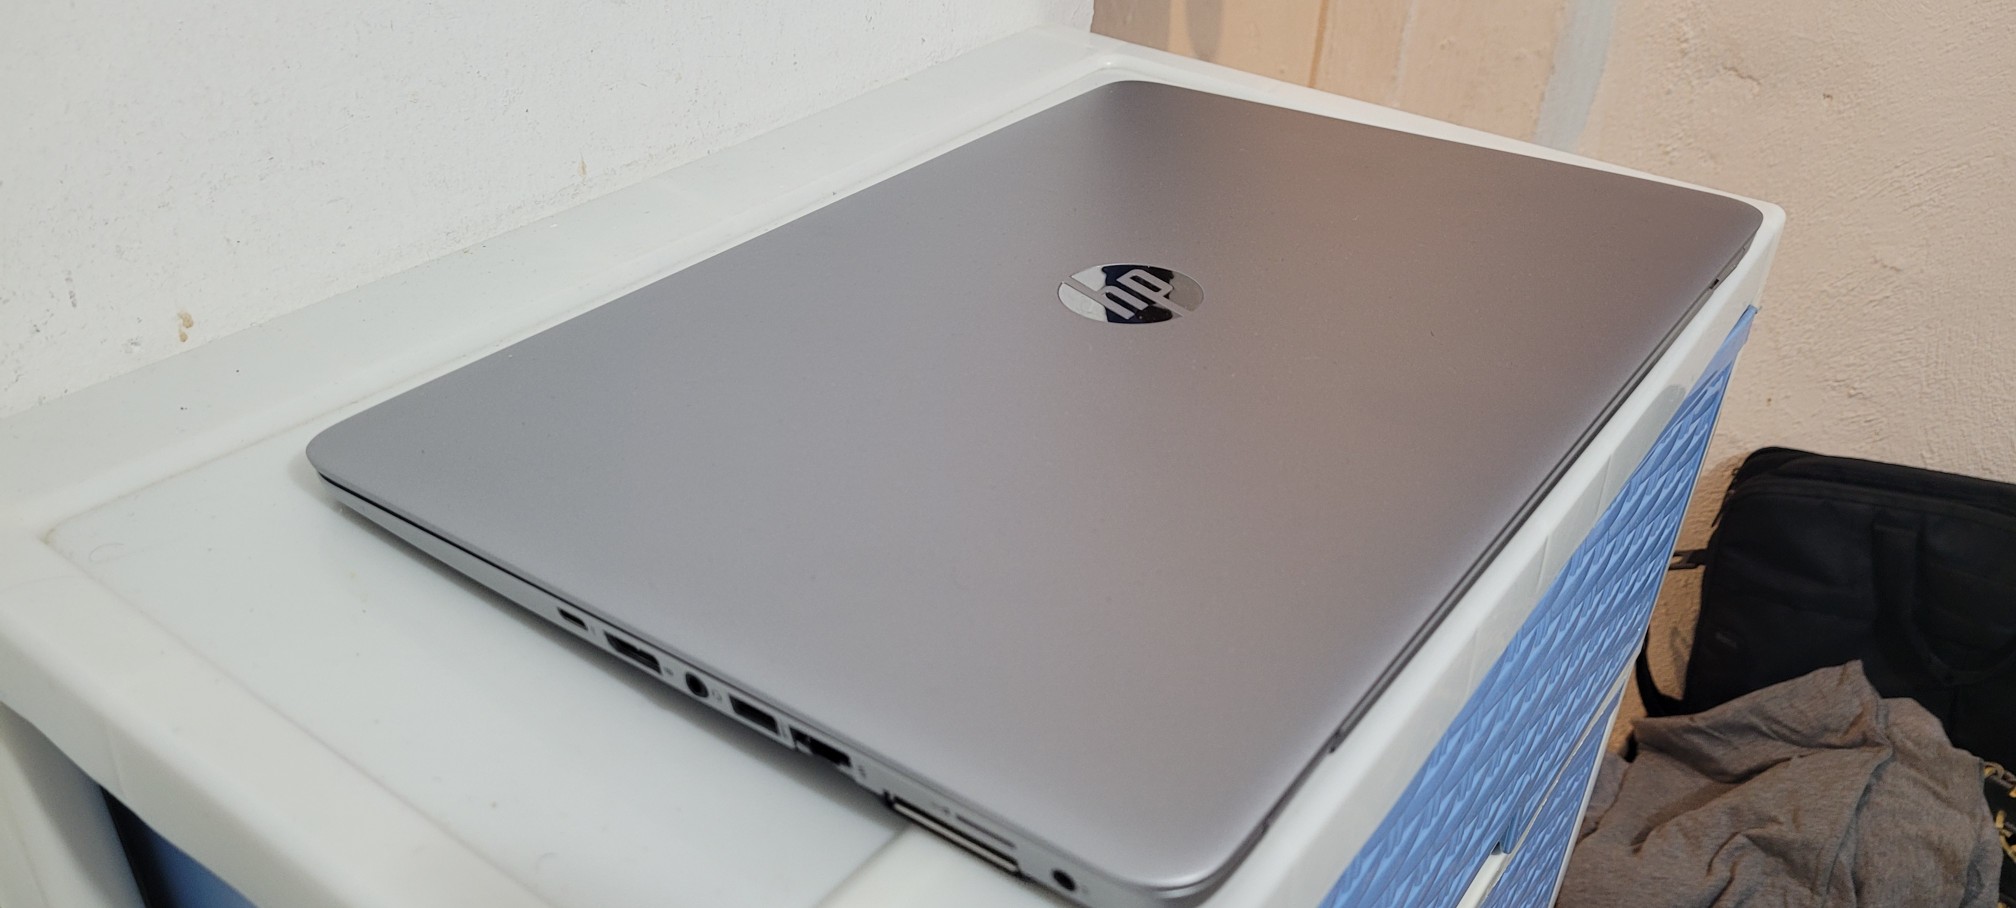 computadoras y laptops - Laptop hp Touch 14 Pulg Core i5 7ma Gen Ram 8gb ddr4 Disco 500gb Full 2